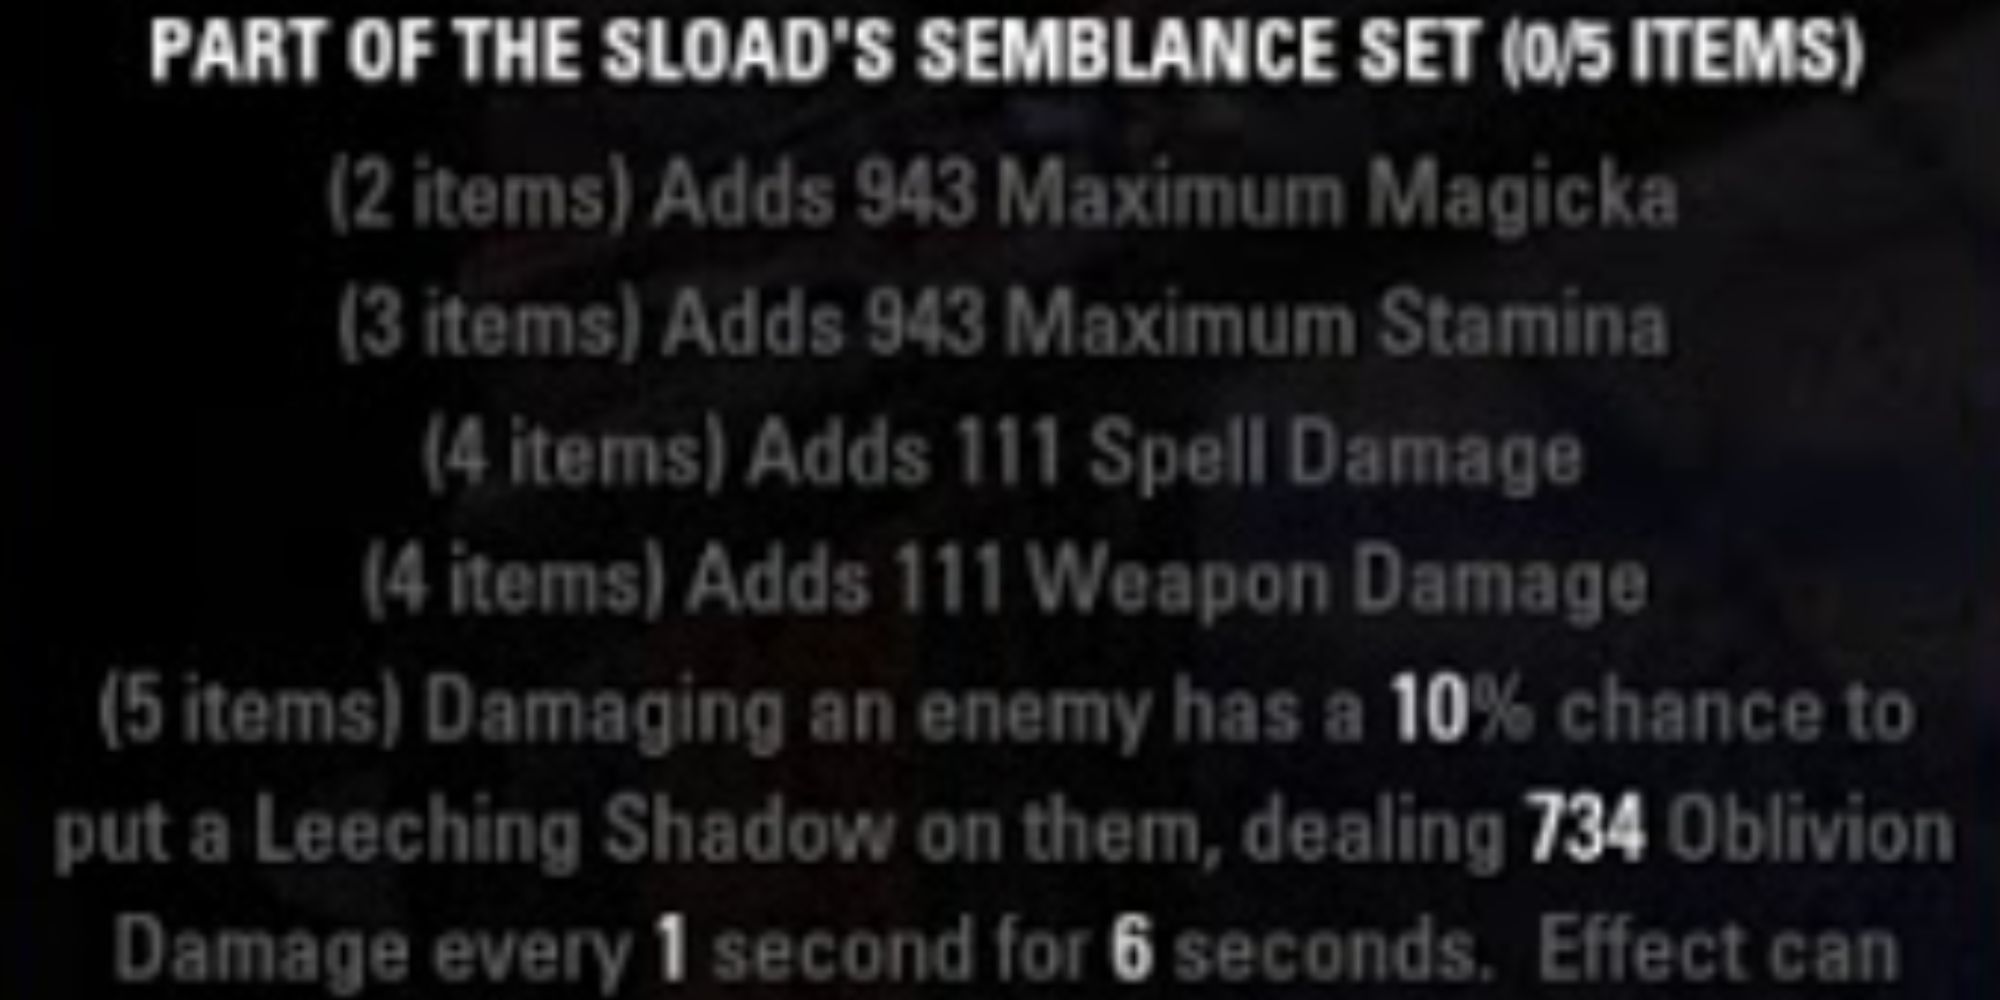 ESO Sload's Semblance Set Description Inside Inventory